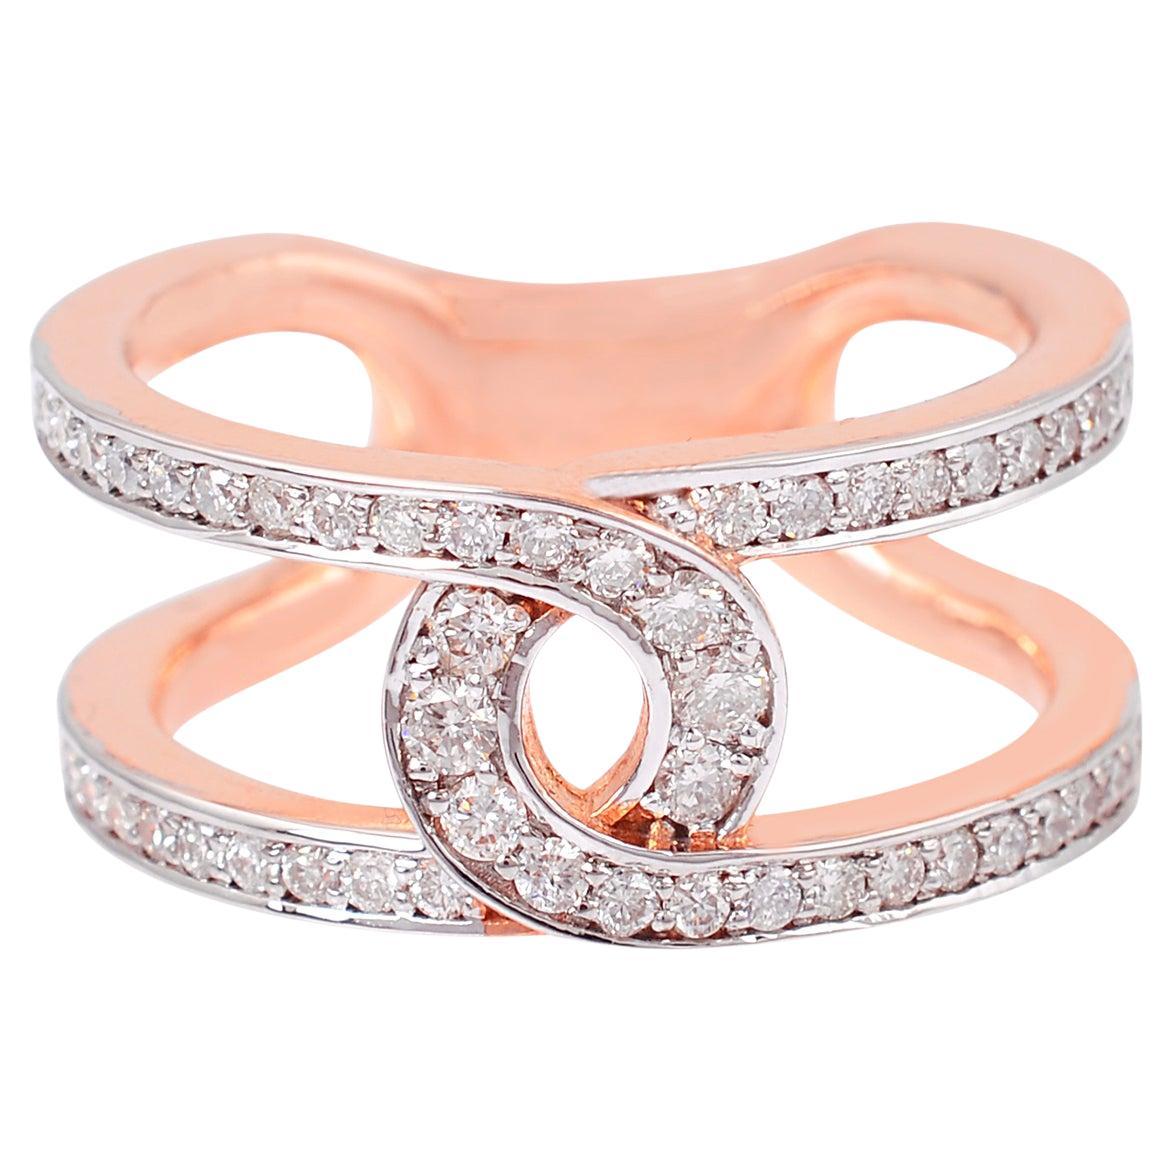 0.70 Carat Round Diamond Belt Design Ring 18 Karat Rose Gold Handmade Jewelry